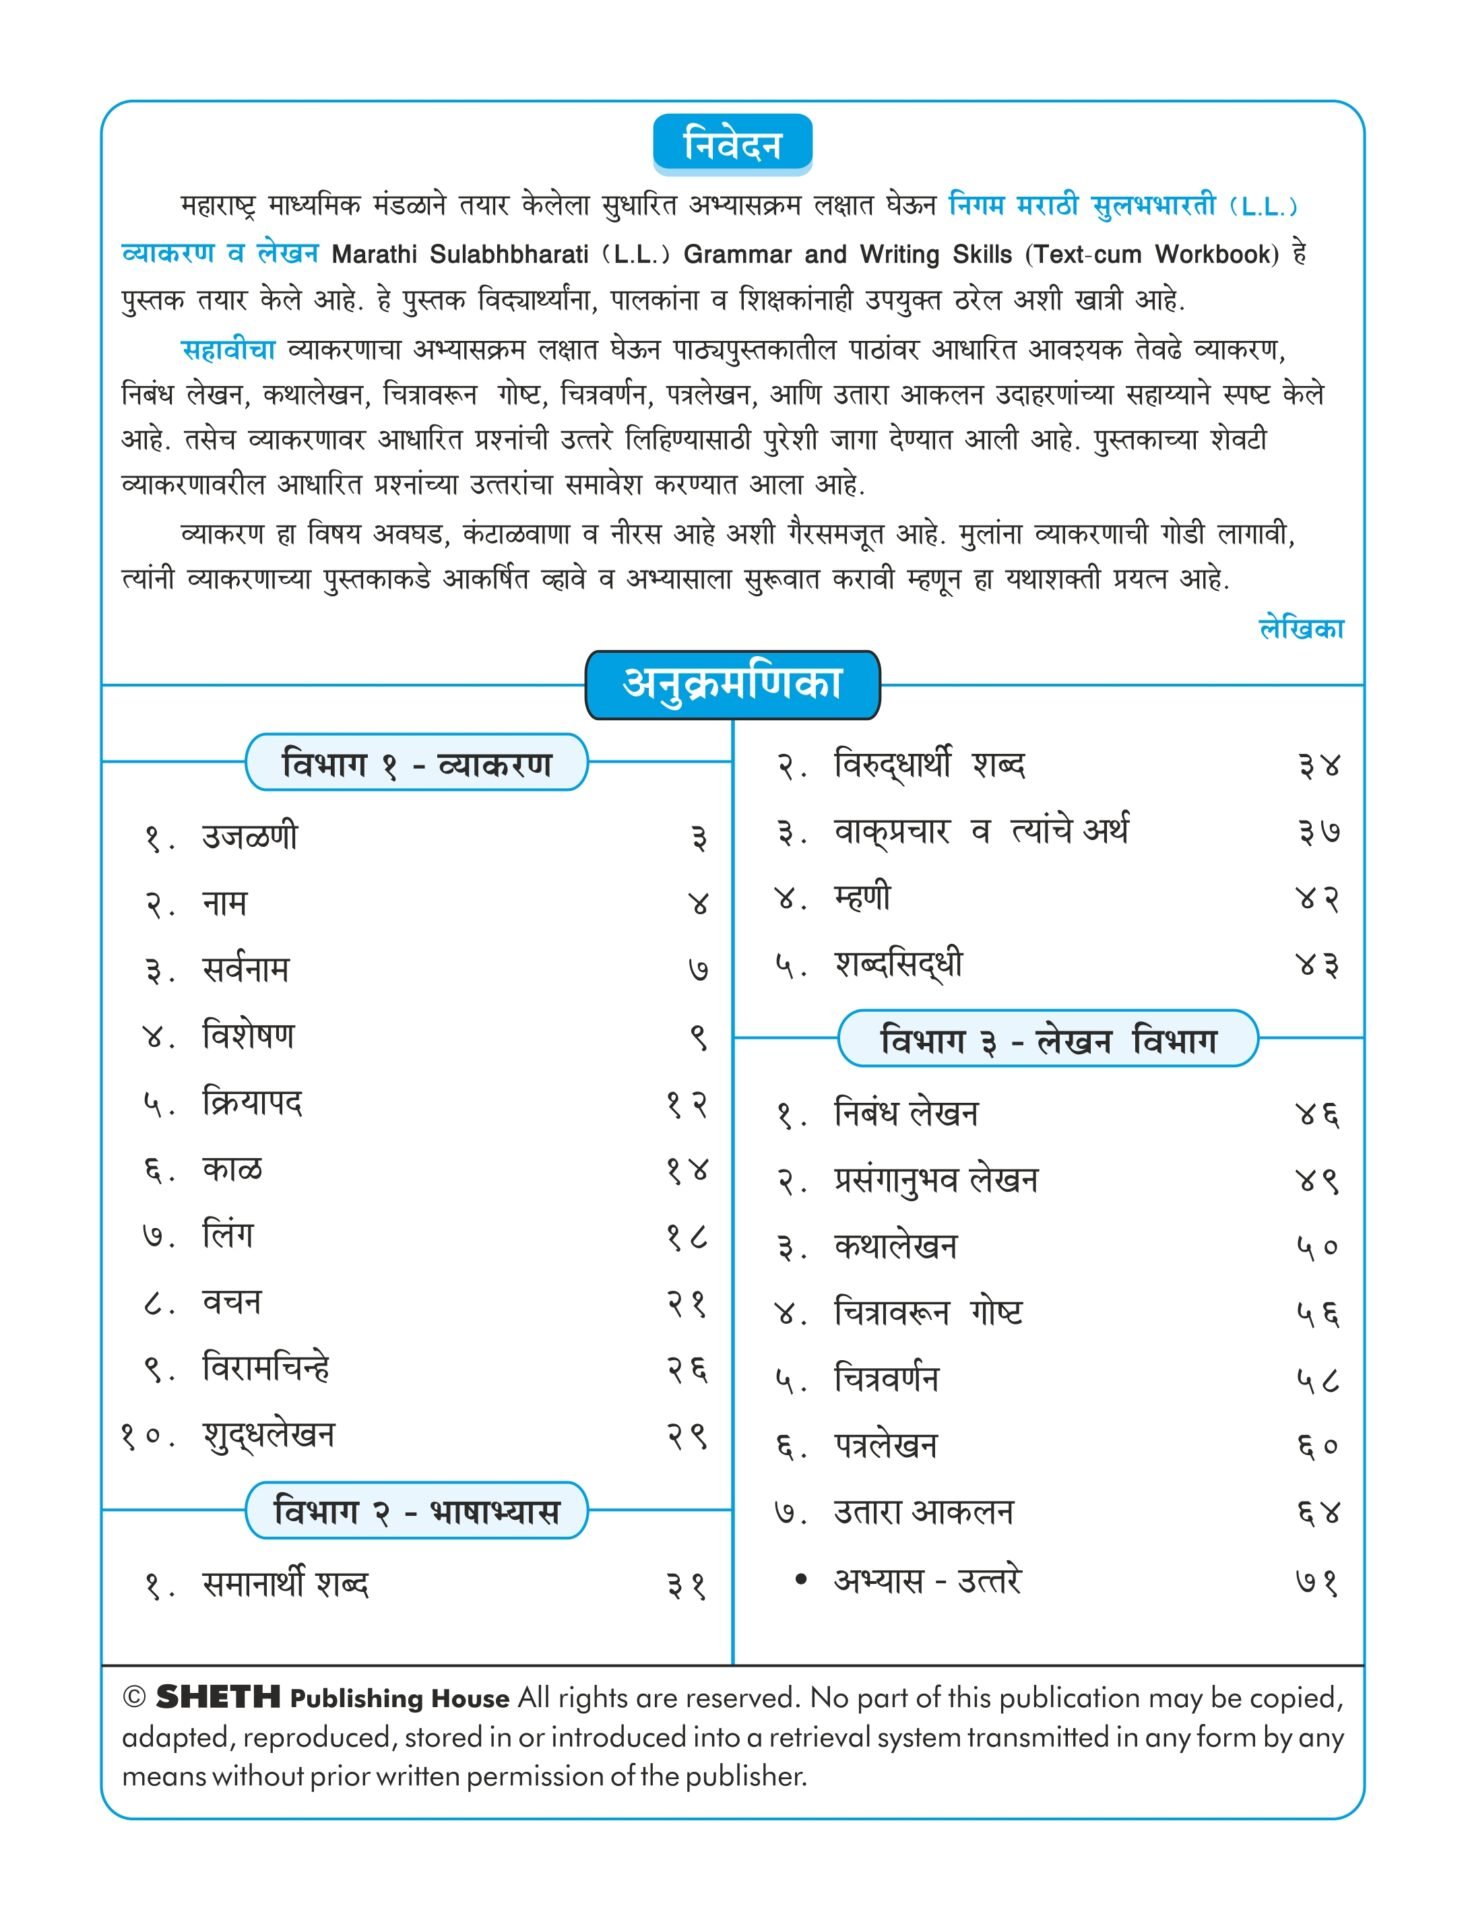 Nigam Marathi Sulabhbharati Grammar And Writing Skills Standard 6 2